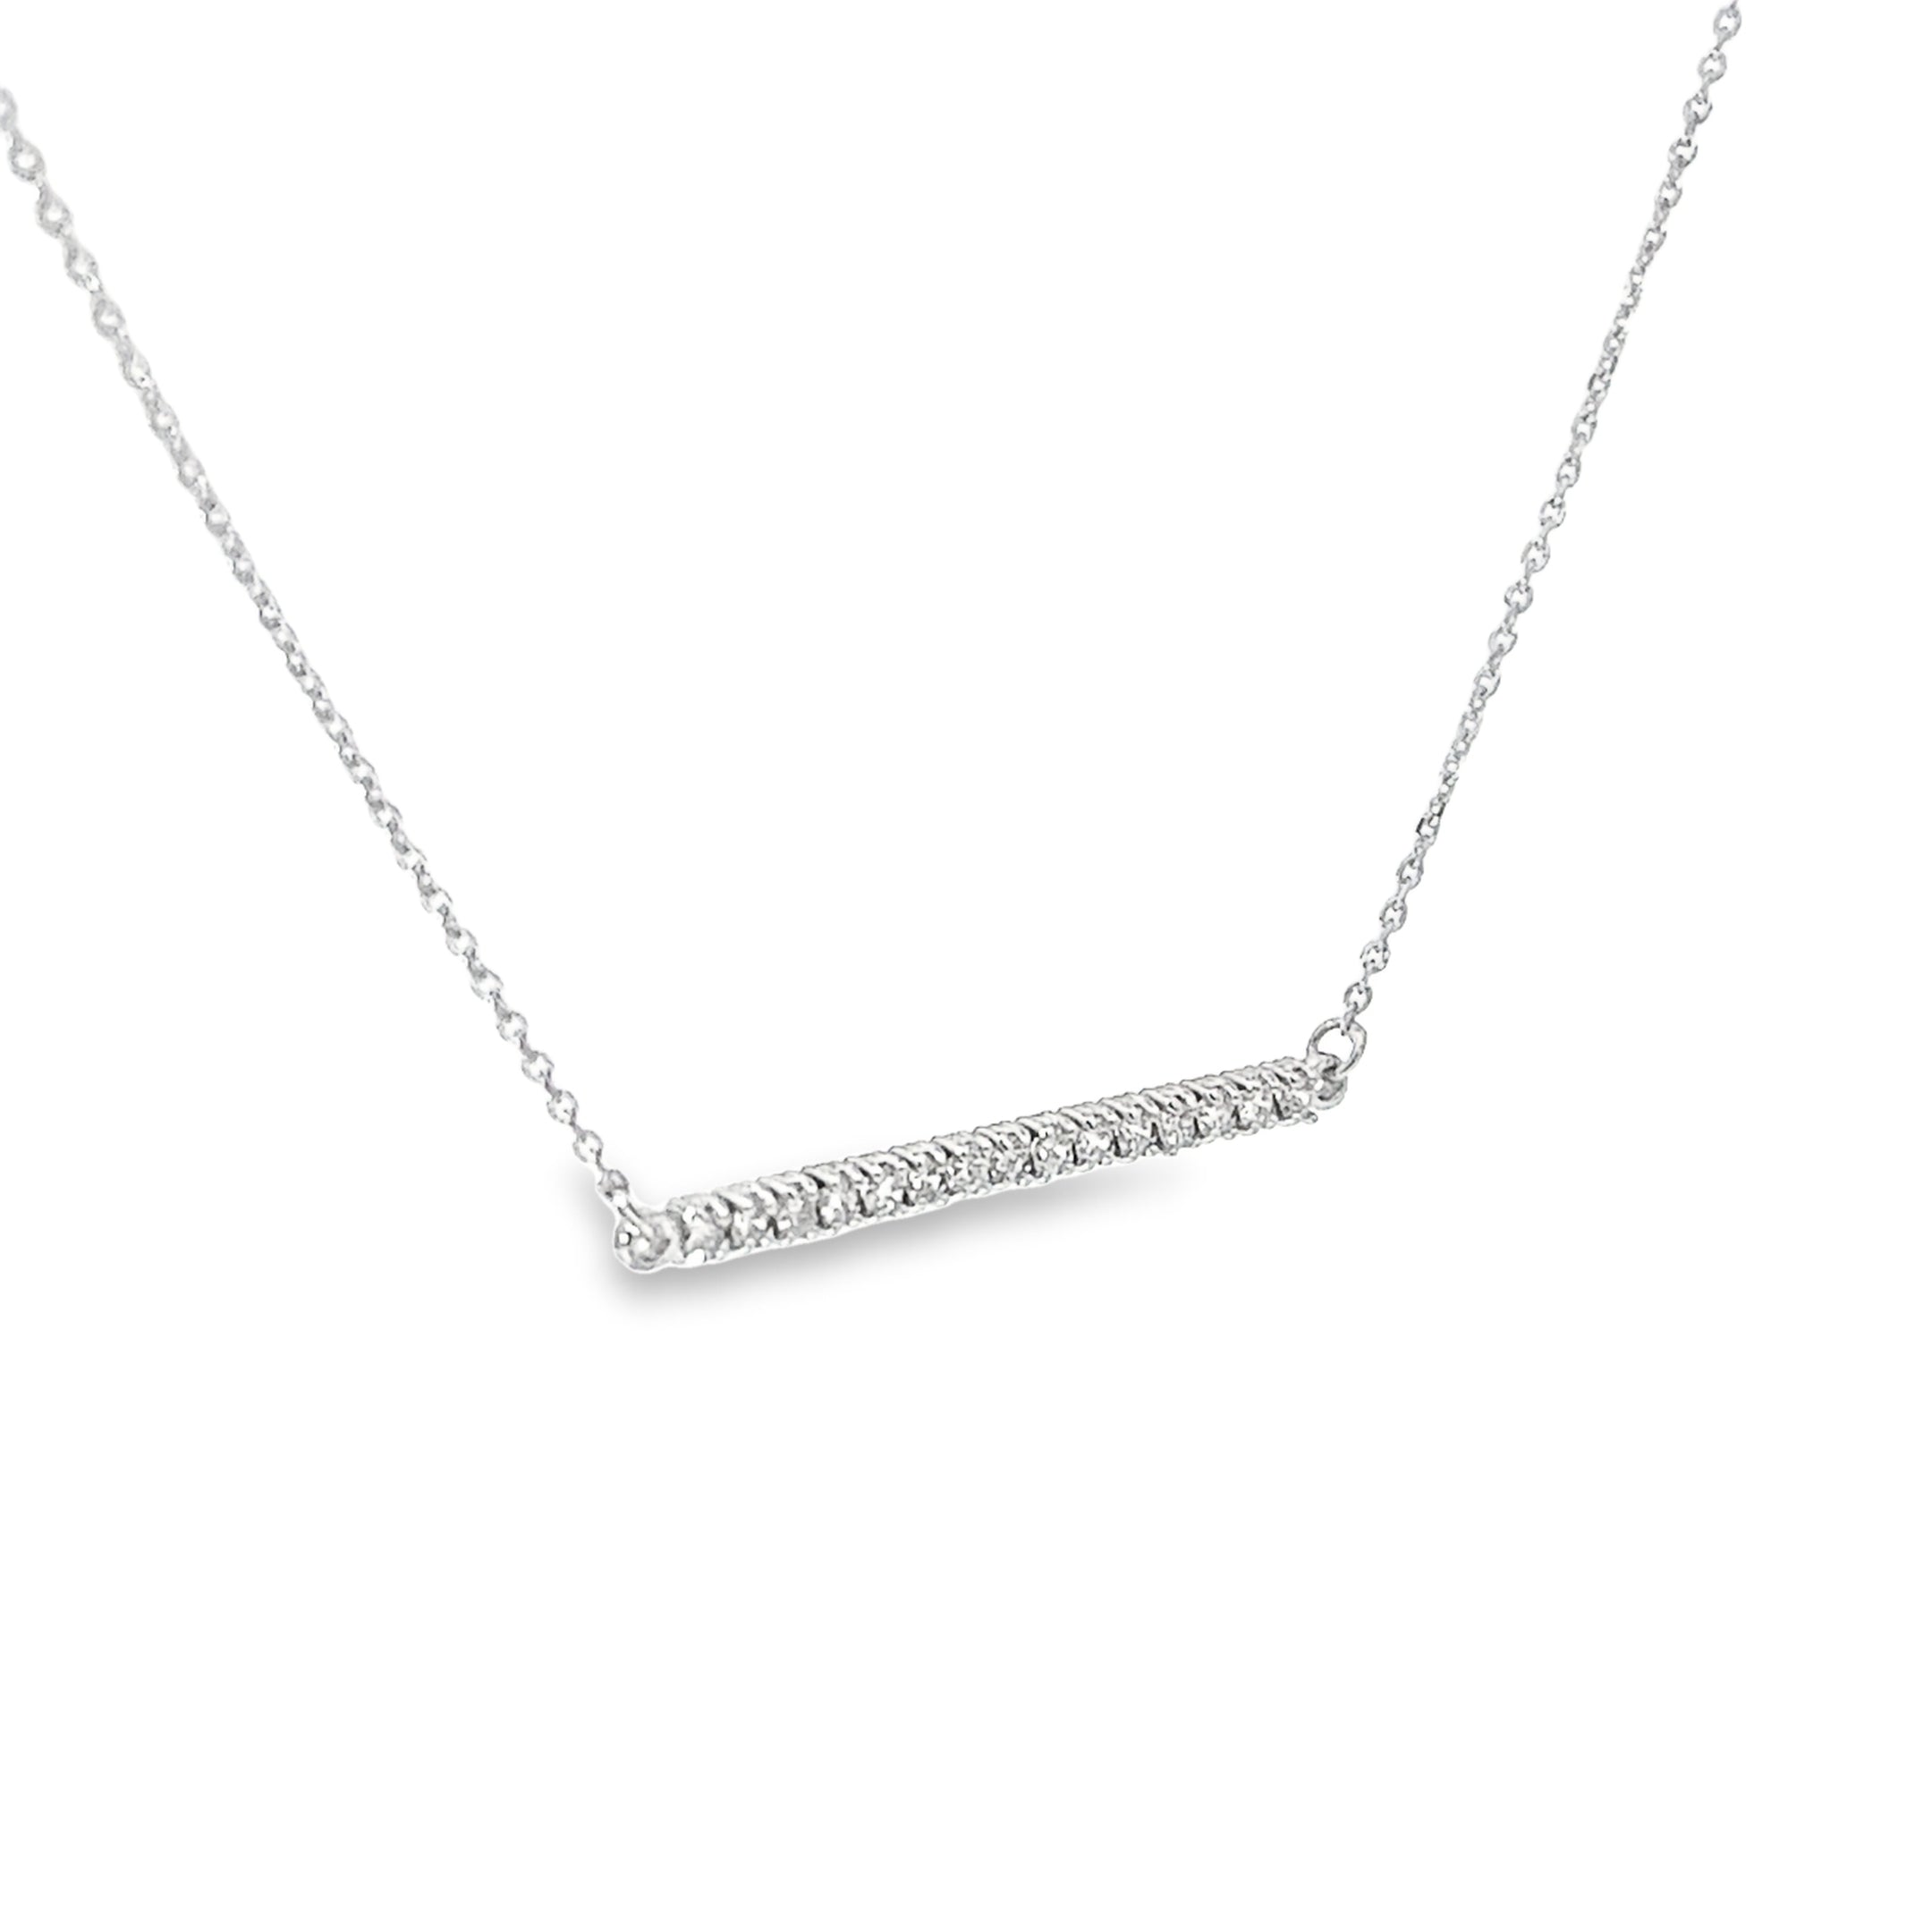 Ladies 14k white gold diamond bar necklace